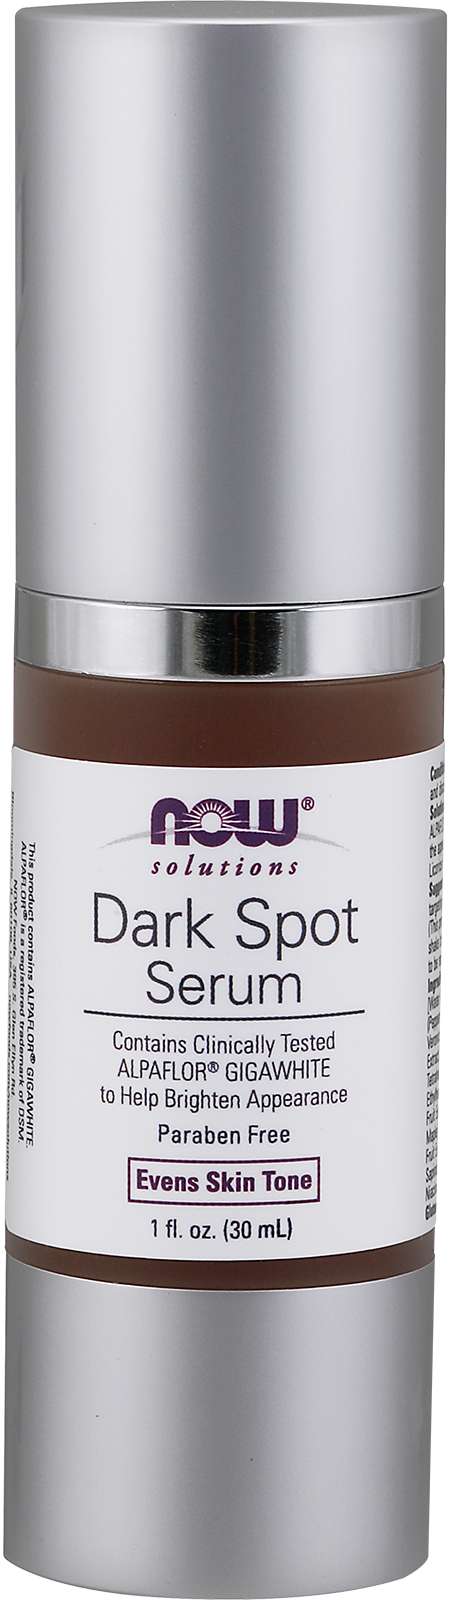 Dark Spot Serum - Evens Skin Tone 30mL